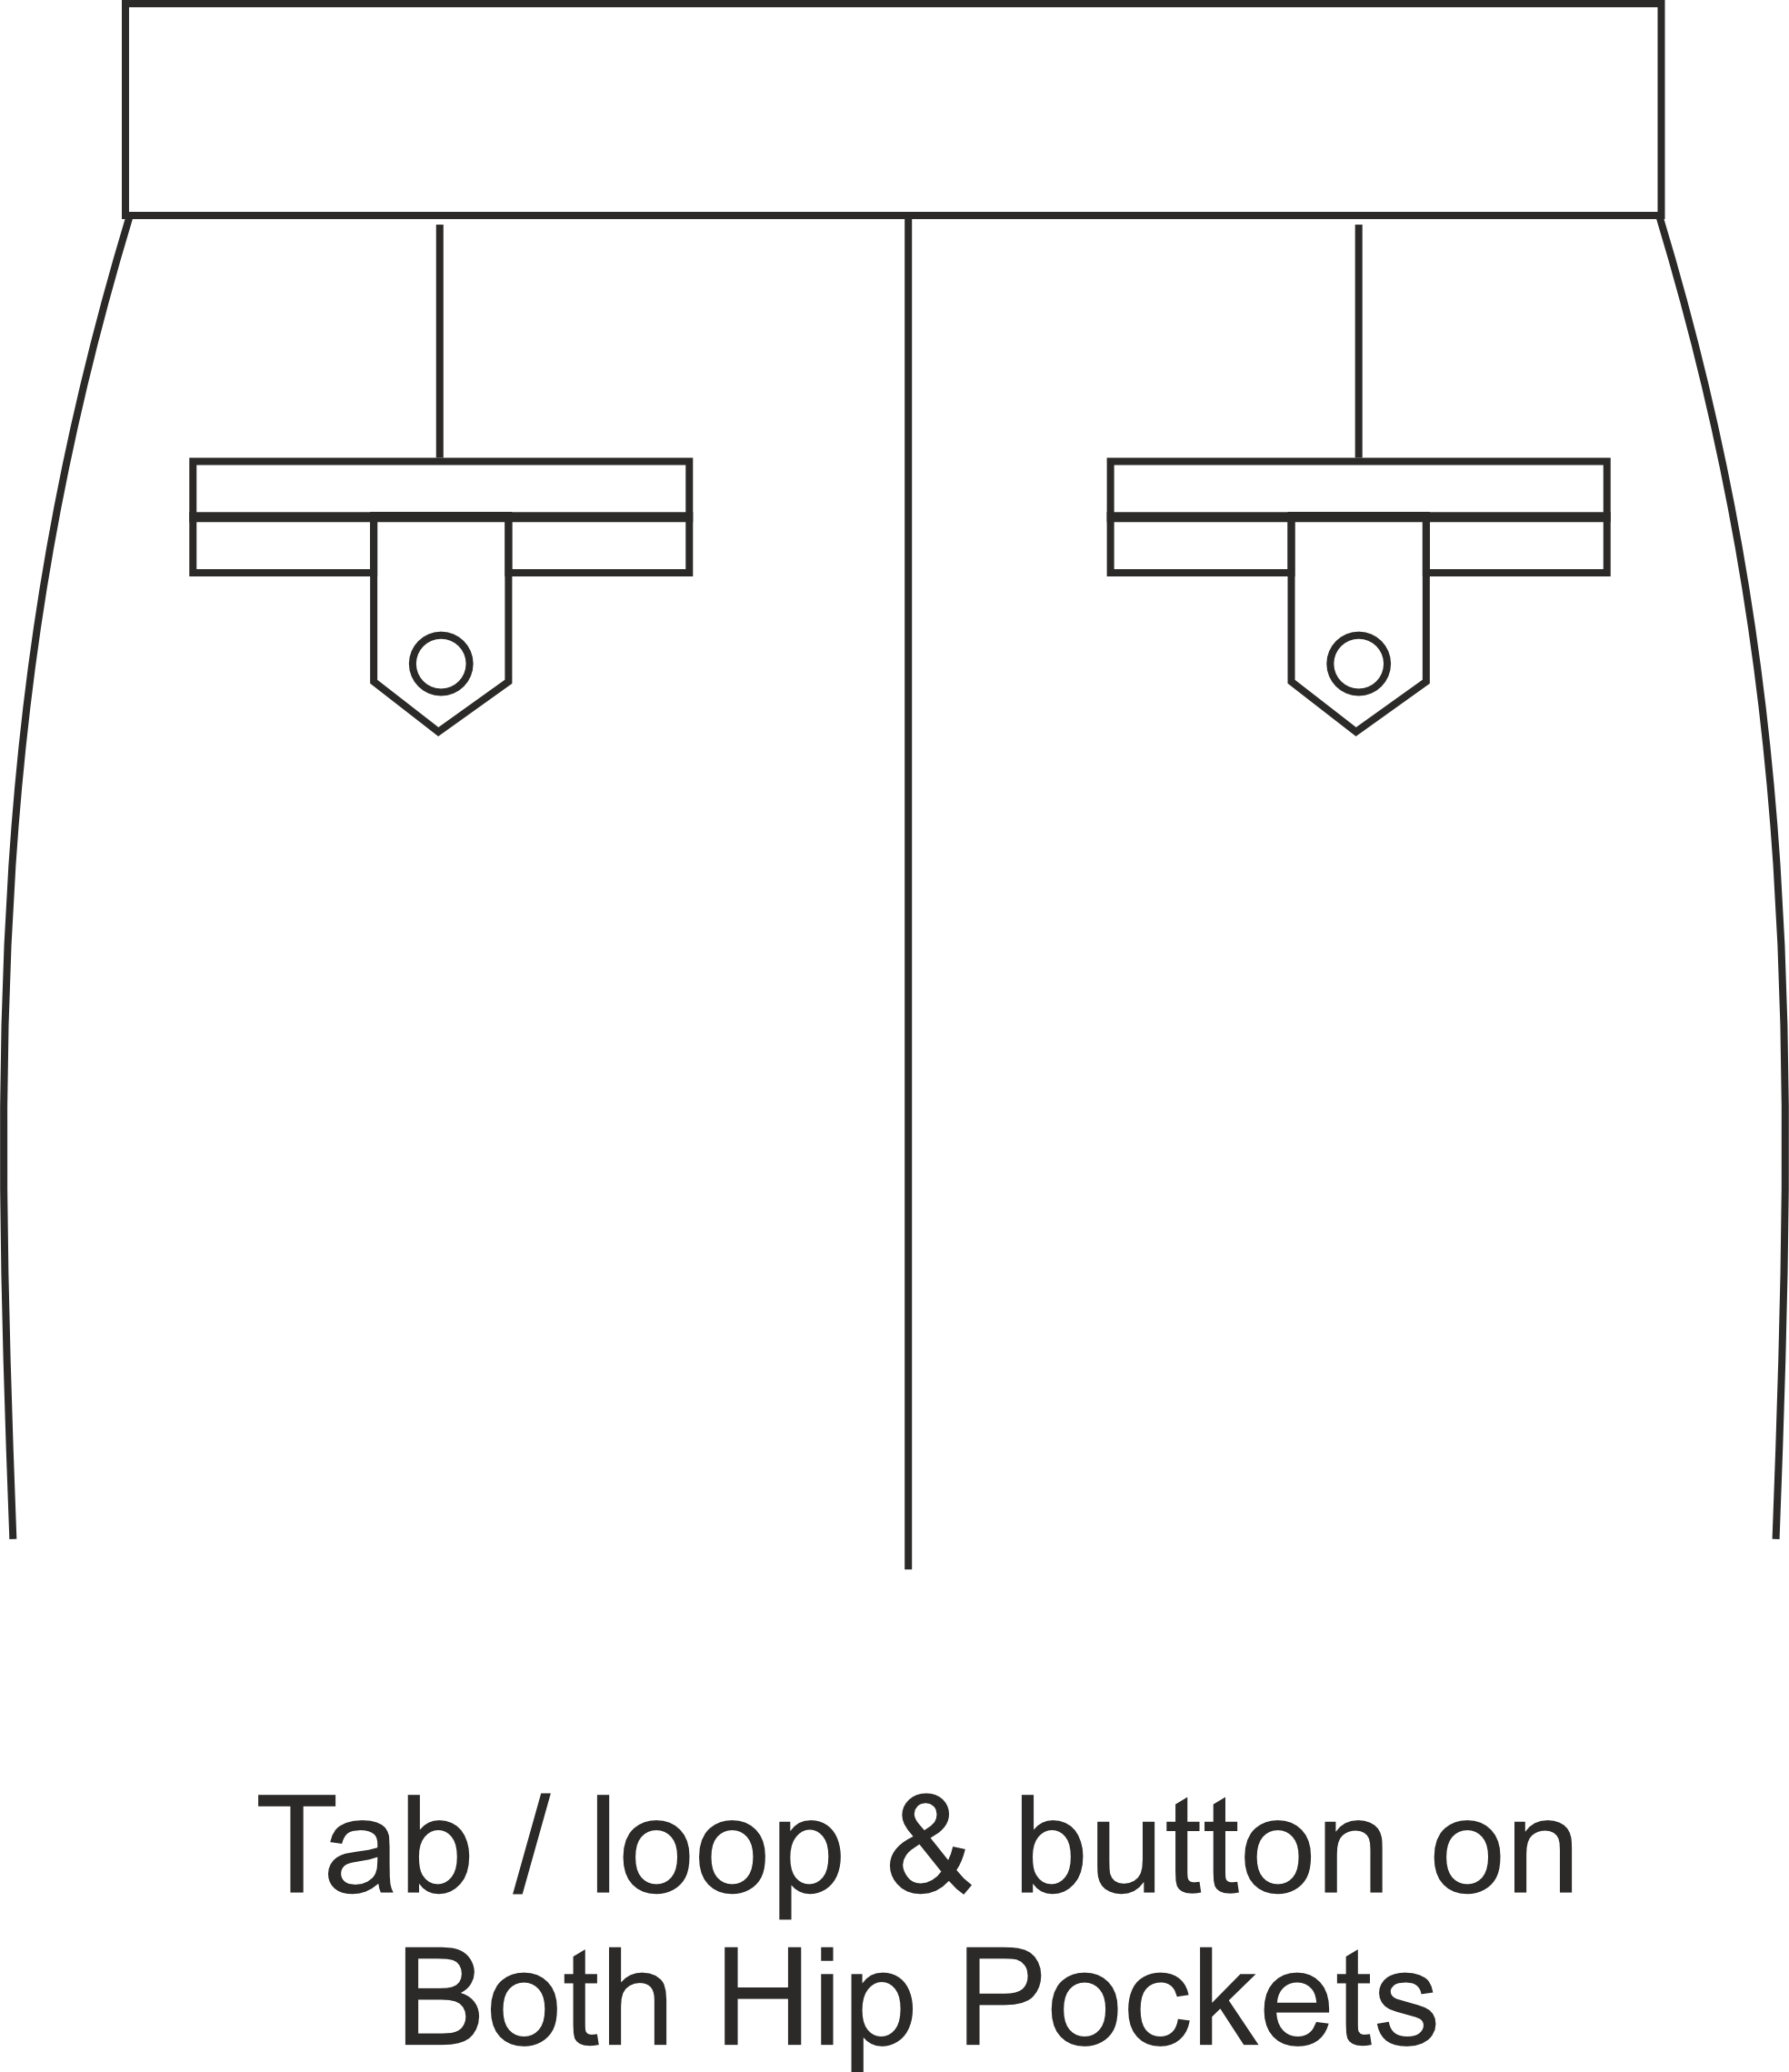 pockets-tab-loop-both-hip